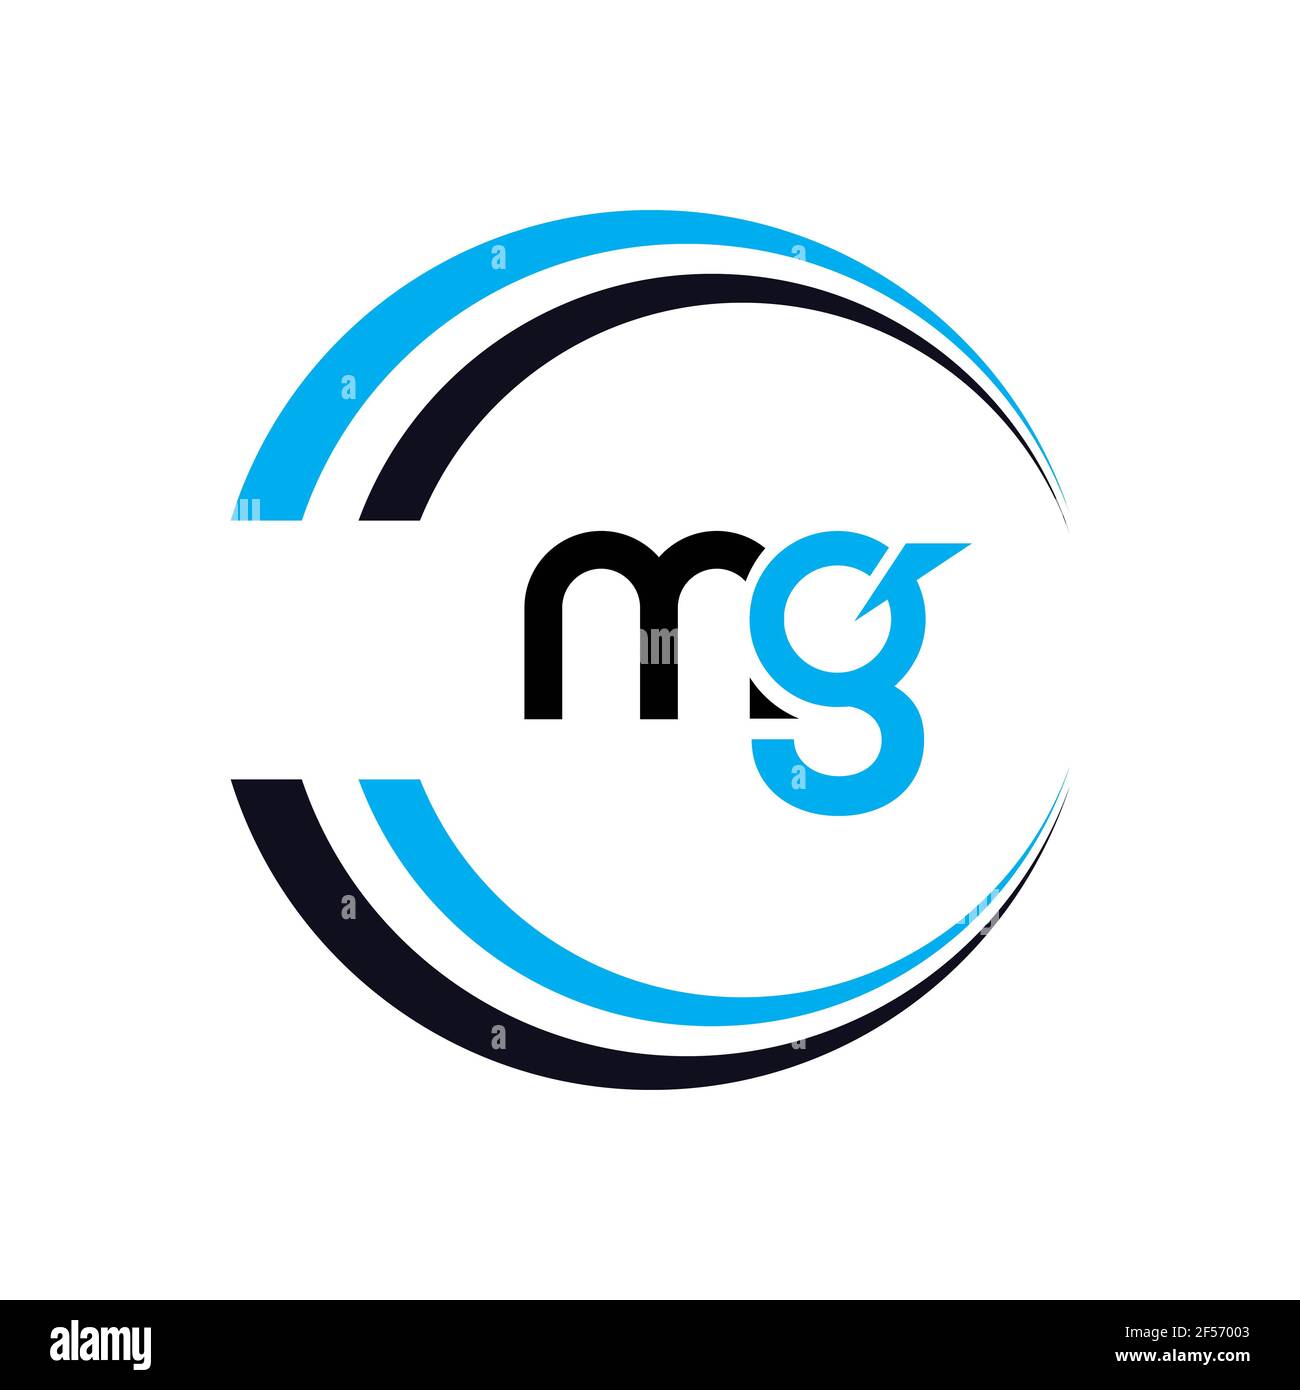 Premium Vector  Creative mg or gm letter initial circle shape pattern line  art elegant monogram modern unique logo